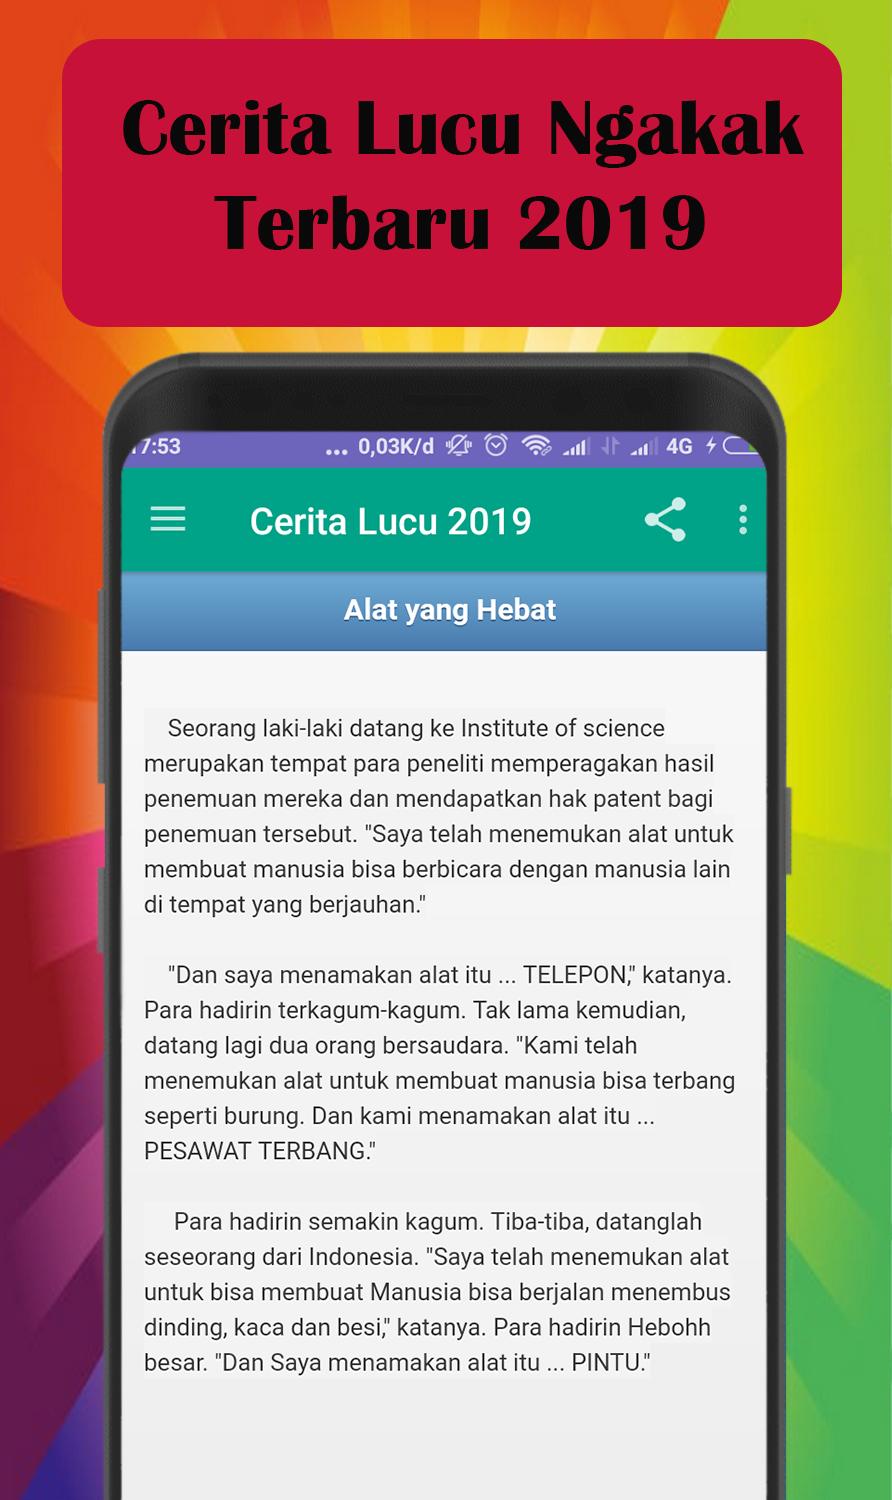 Cerita Lucu Bikin Sakit Perut 2019 For Android Apk Download